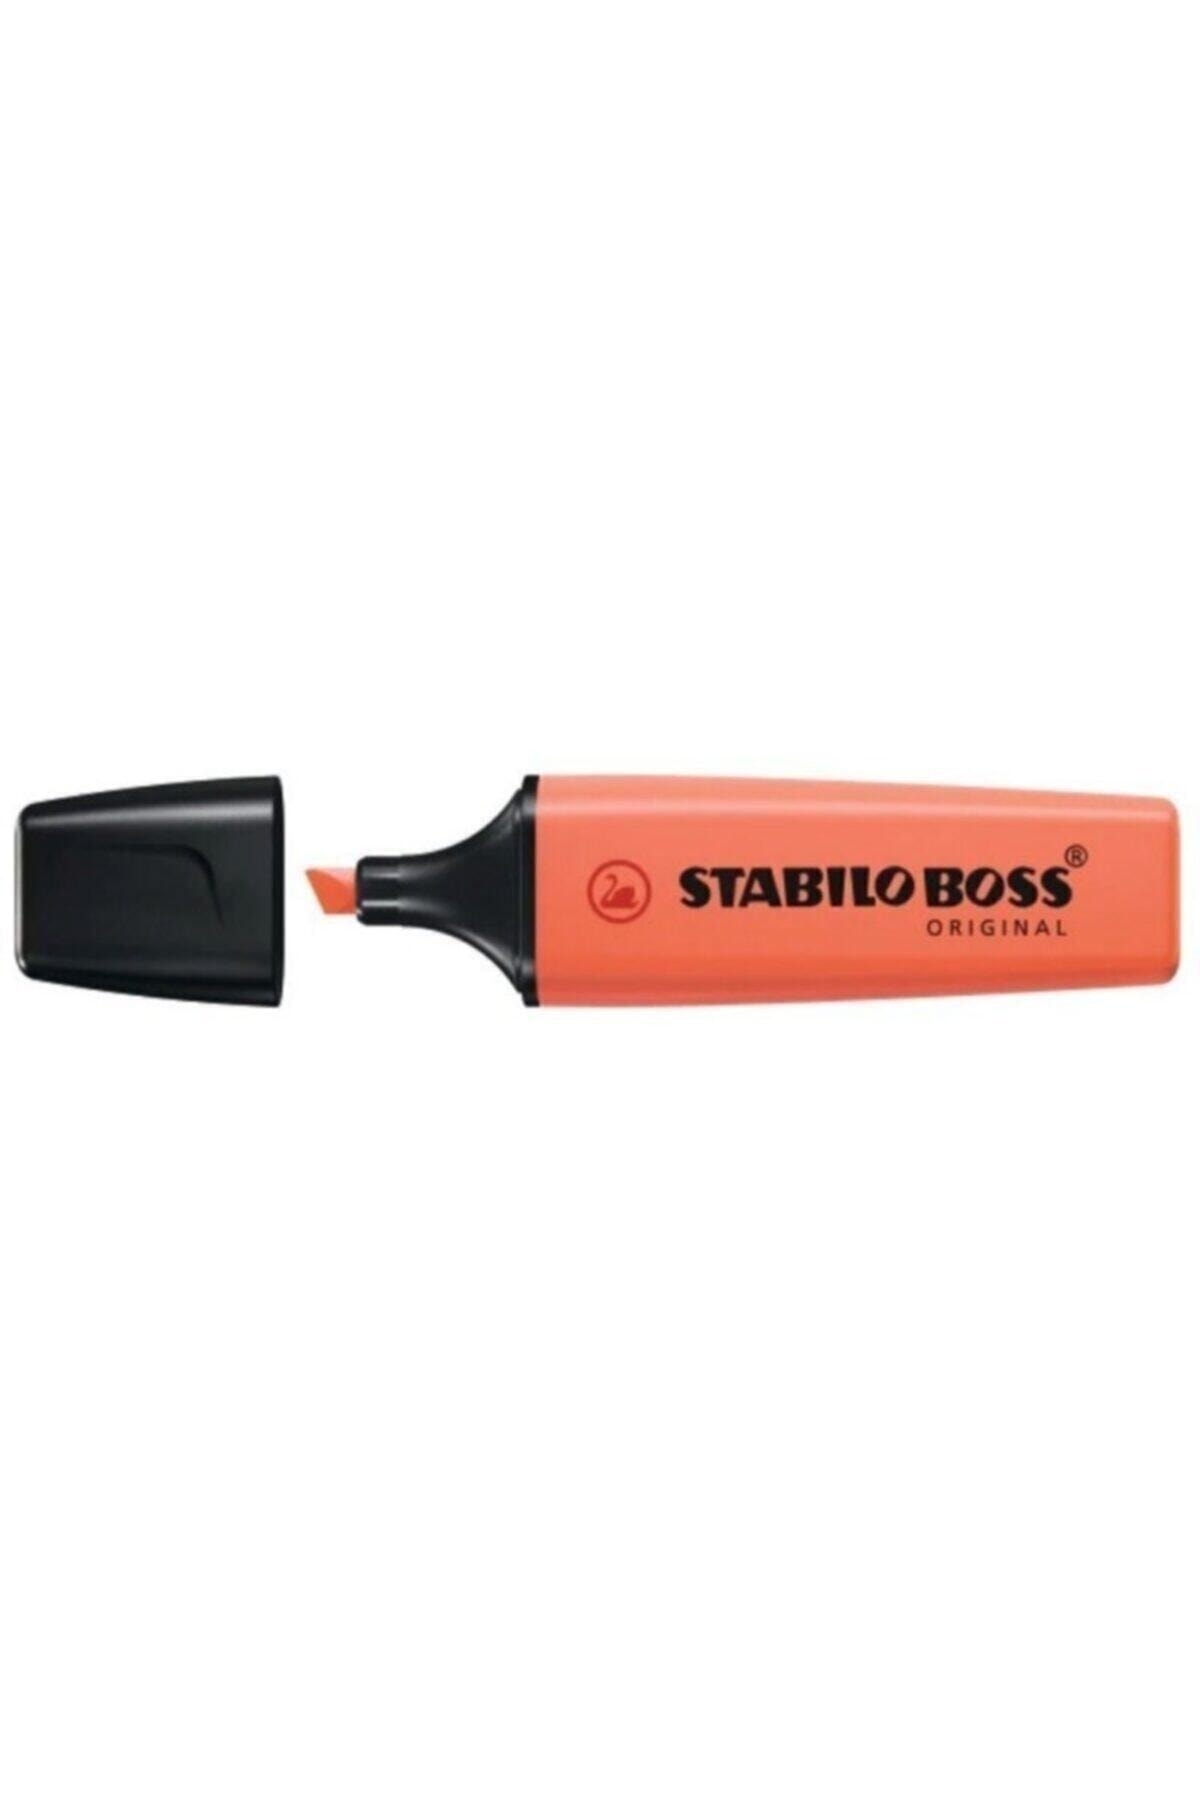 Stabilo Stabılo Boss Orıgınal Pastel Kırmızı 70/140